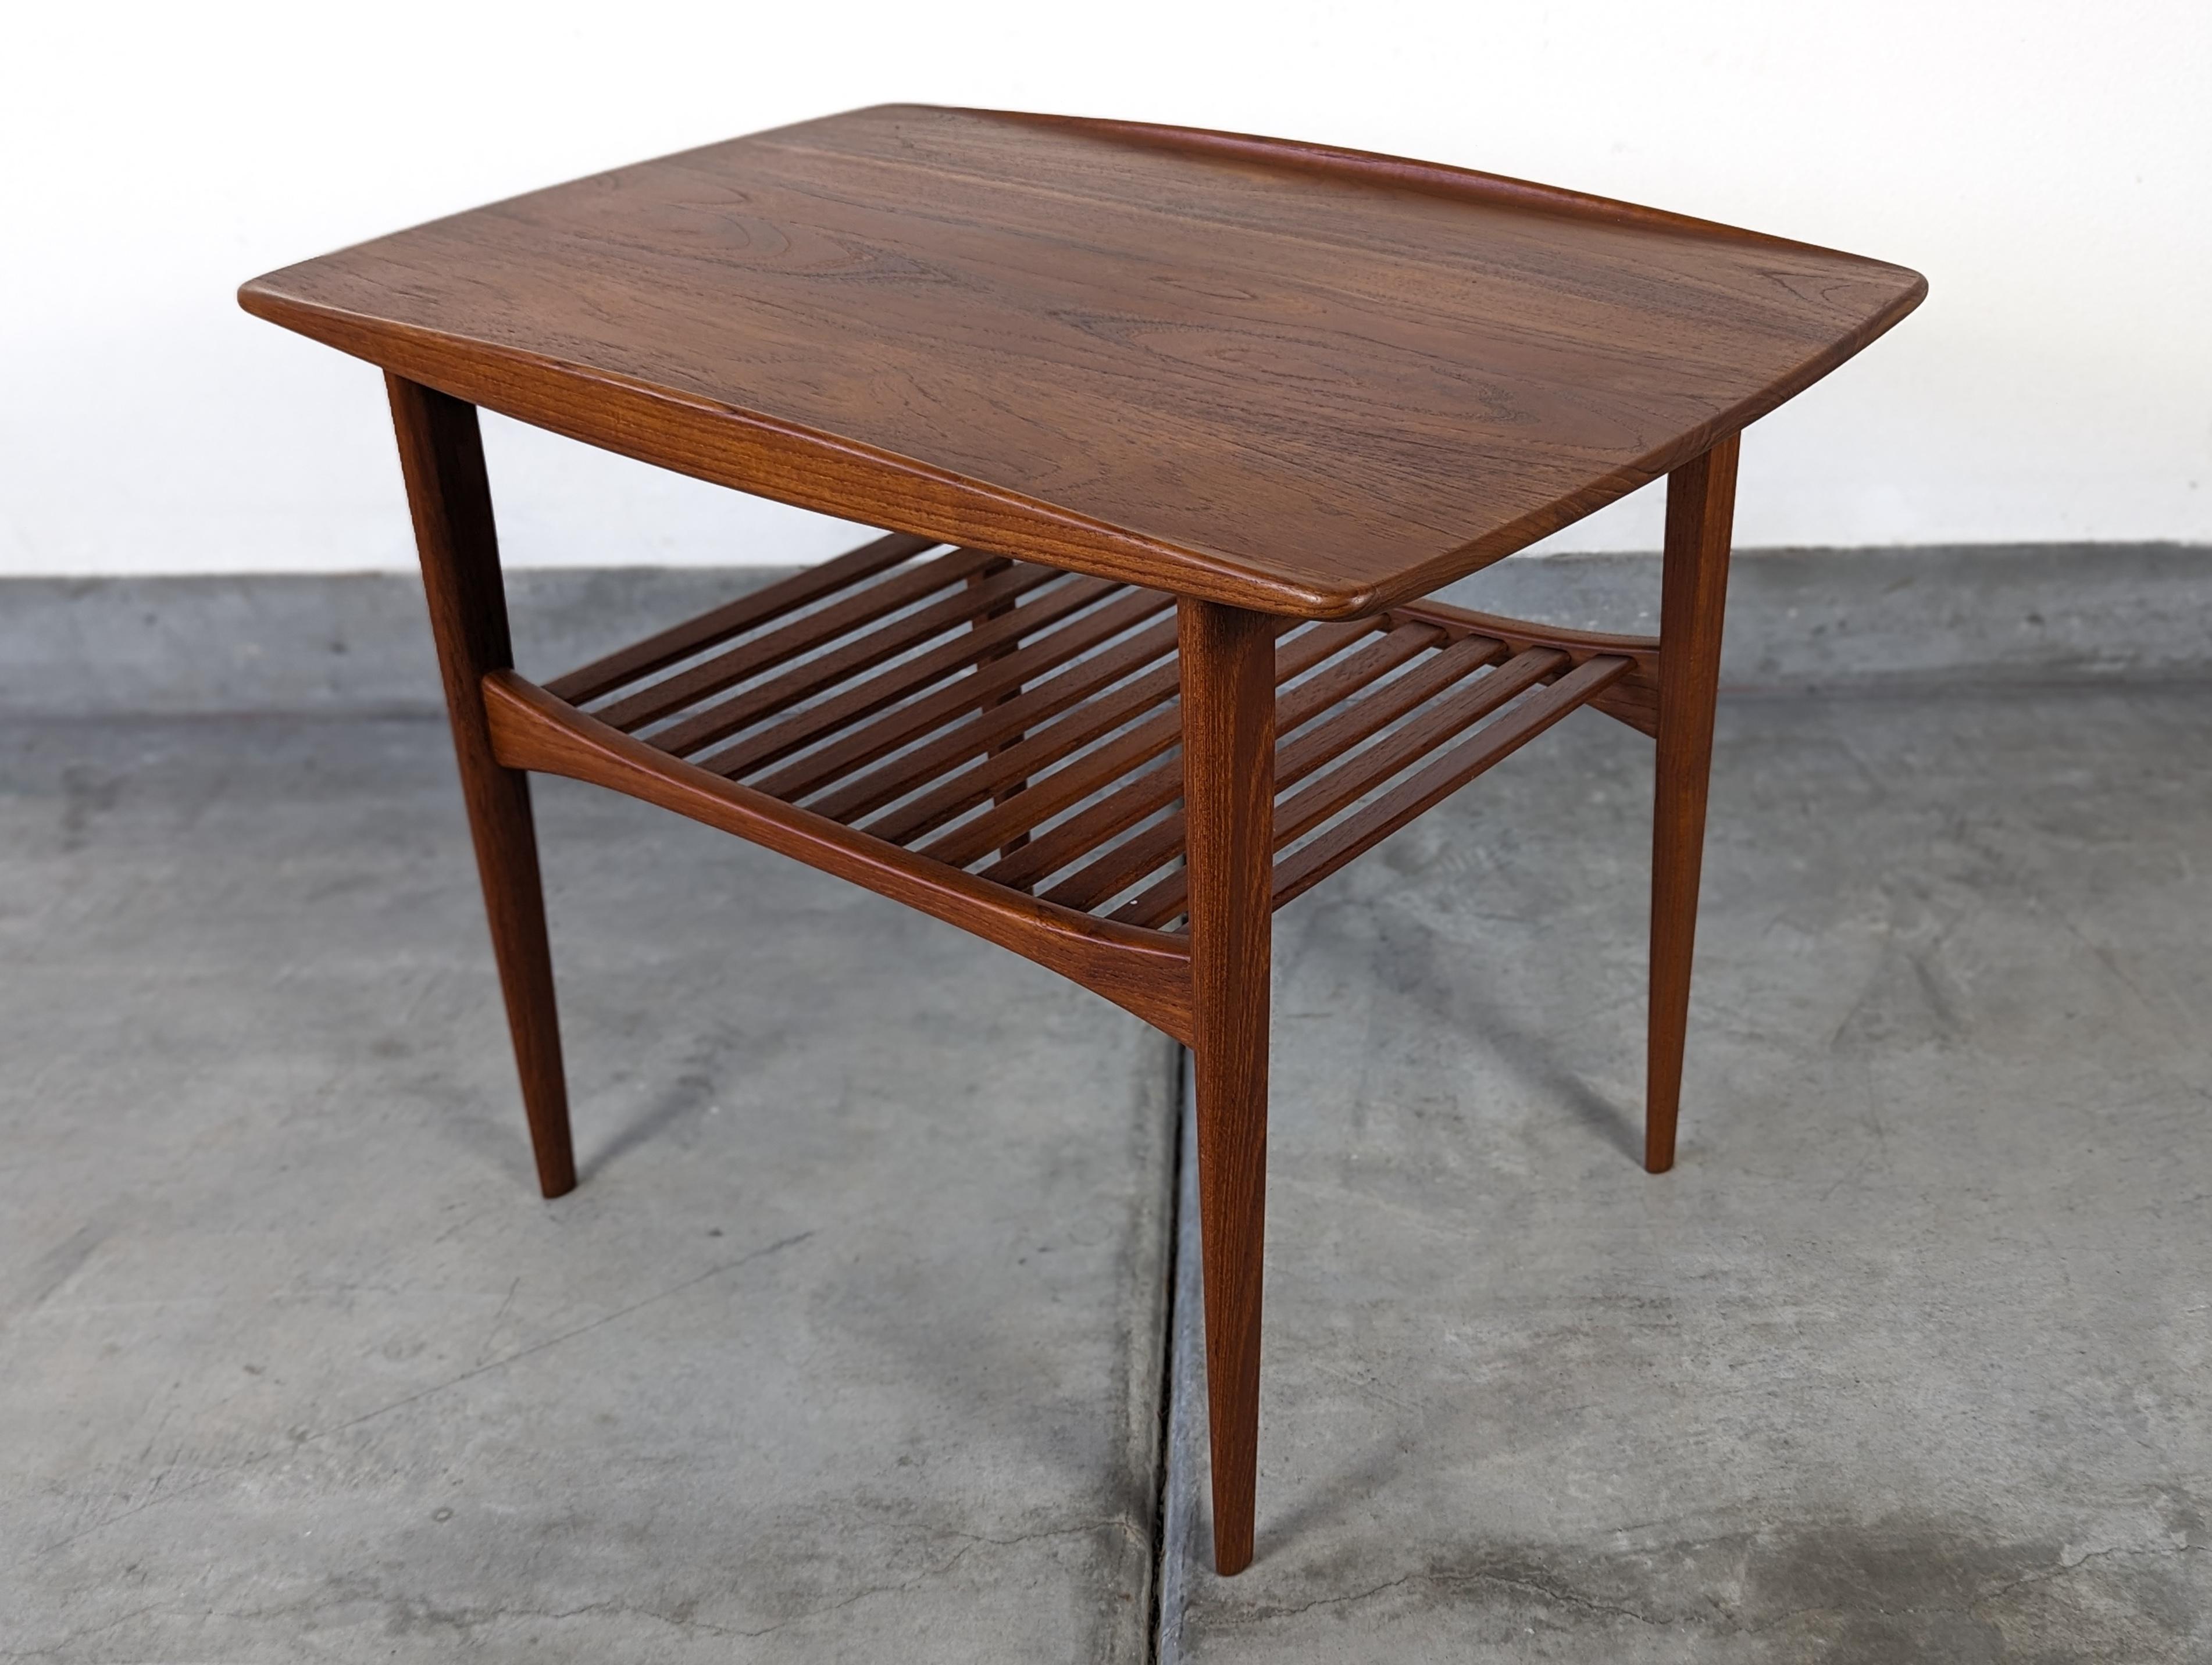 Danish Solid Teak Mid Century Side Table by Finn Juhl for France & Søn, c1950s For Sale 4